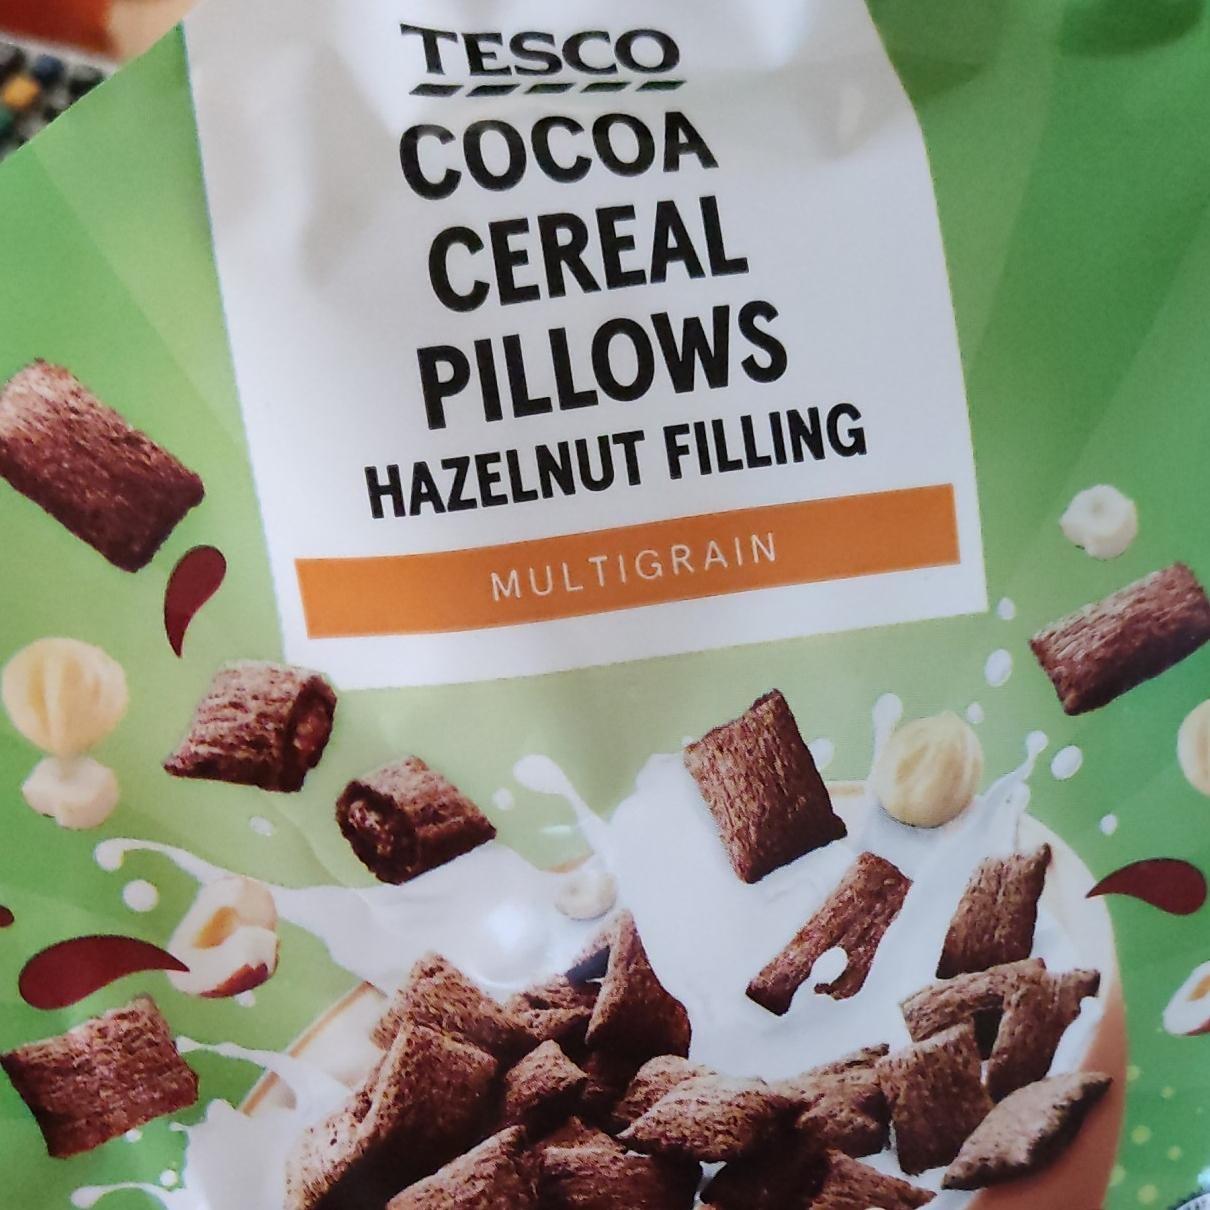 Képek - Cocoa cereal pillows Hazelnut filling Tesco